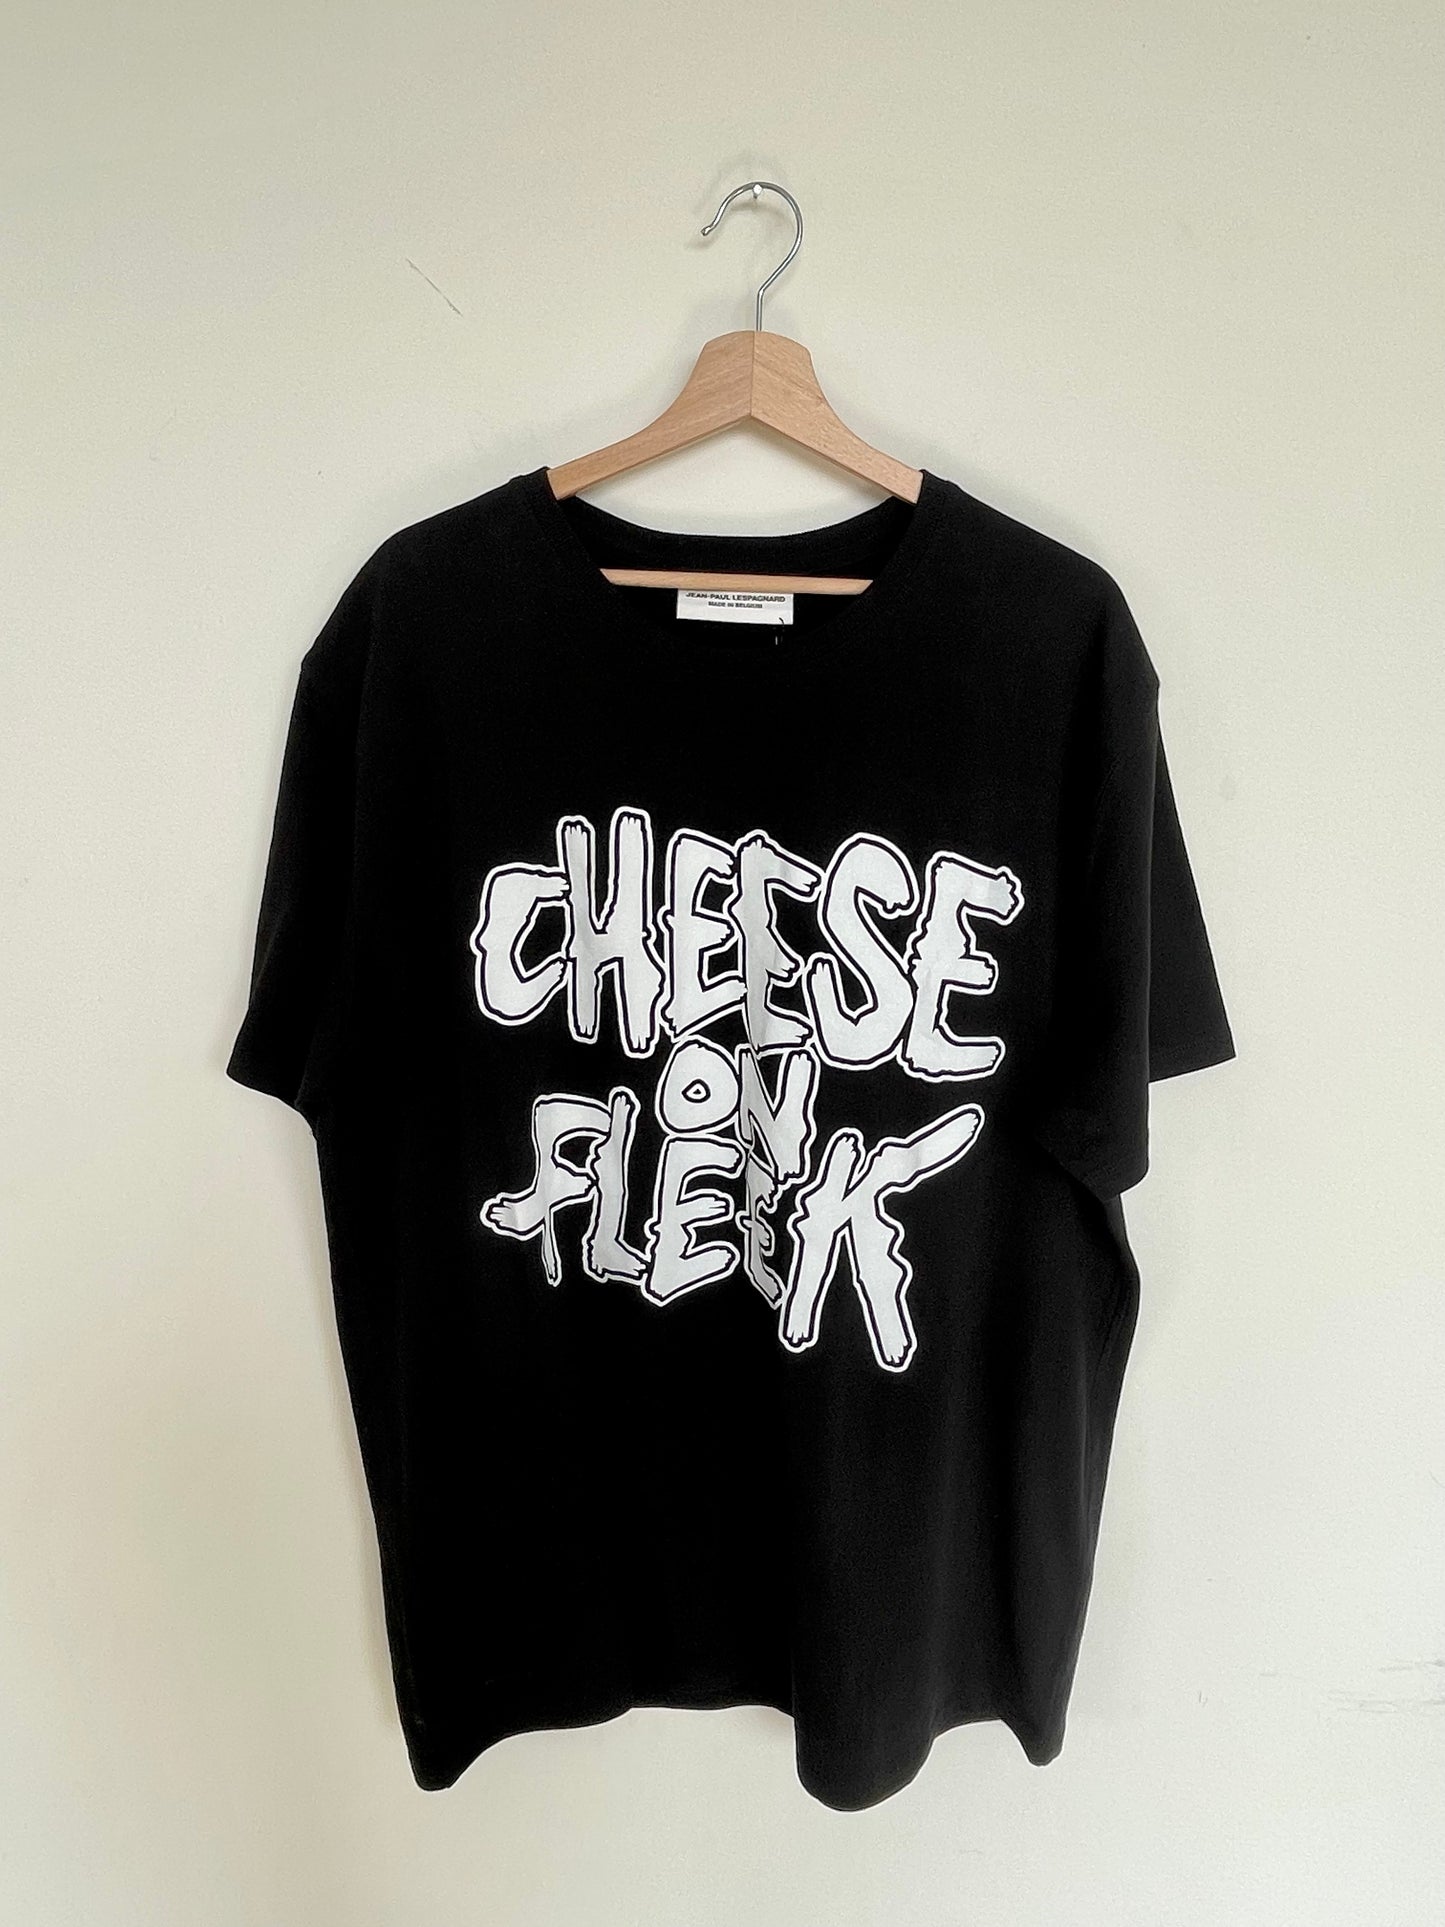 Jean-Paul Lespagnard "Cheese on Fleek" black cotton oversize t-shirt